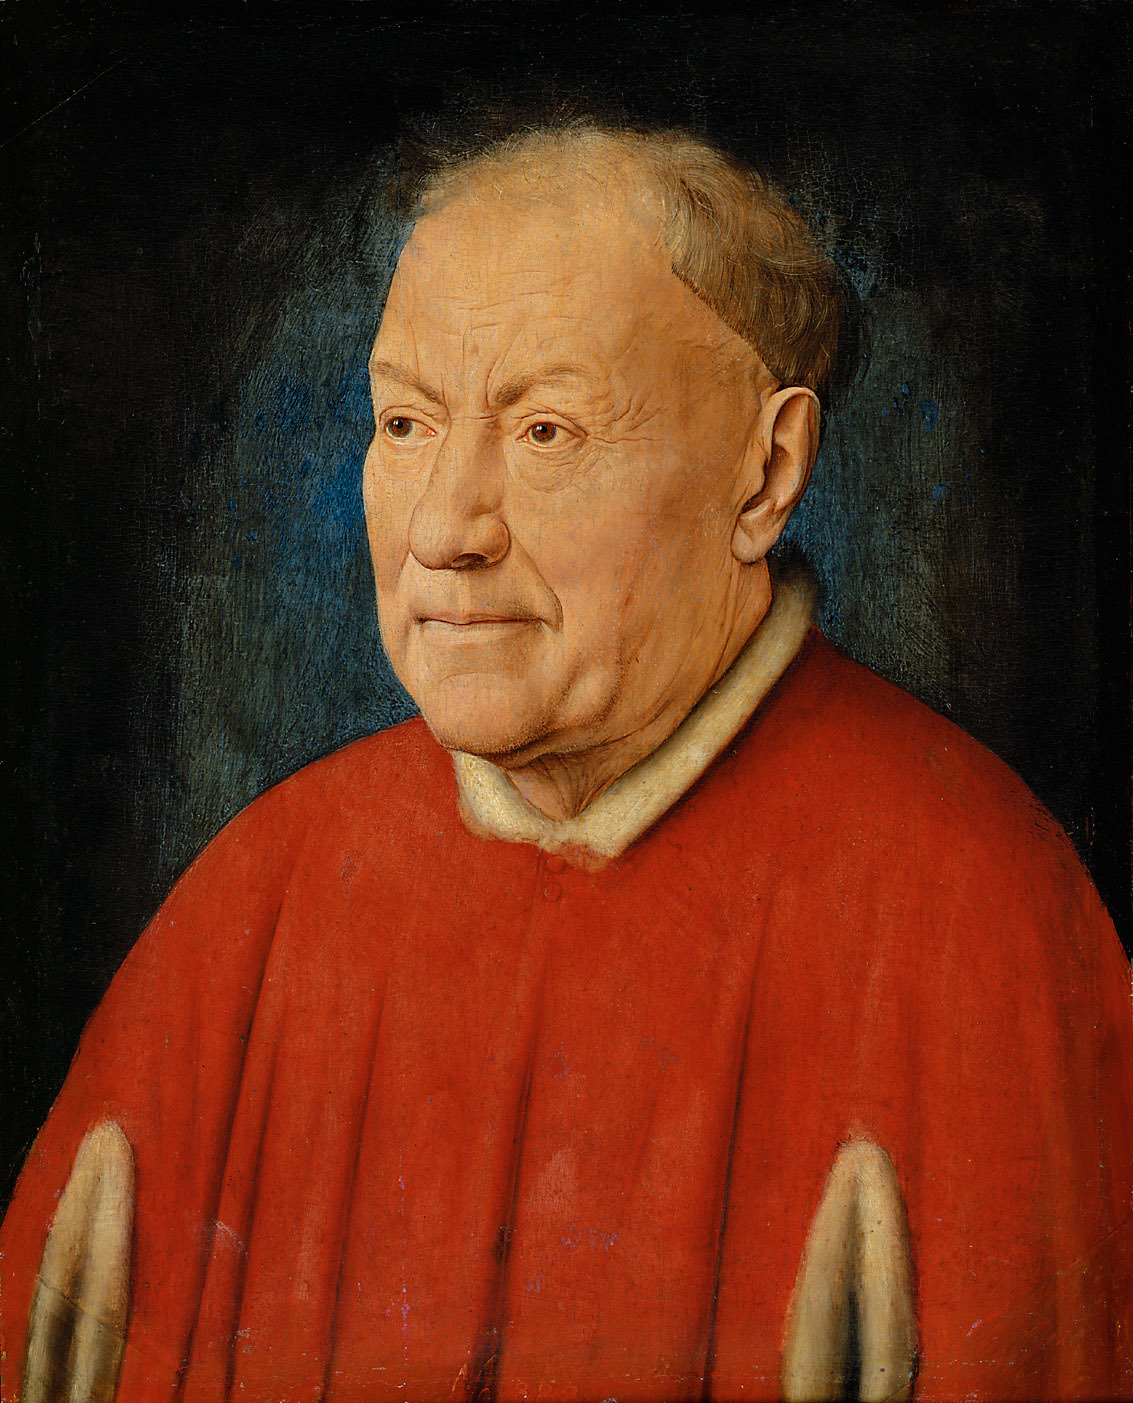 Cardinal Niccolo Albergati by Jan van Eyck - ca. 1380/90 - 34.1 x 27.3 cm Kunsthistorisches Museum